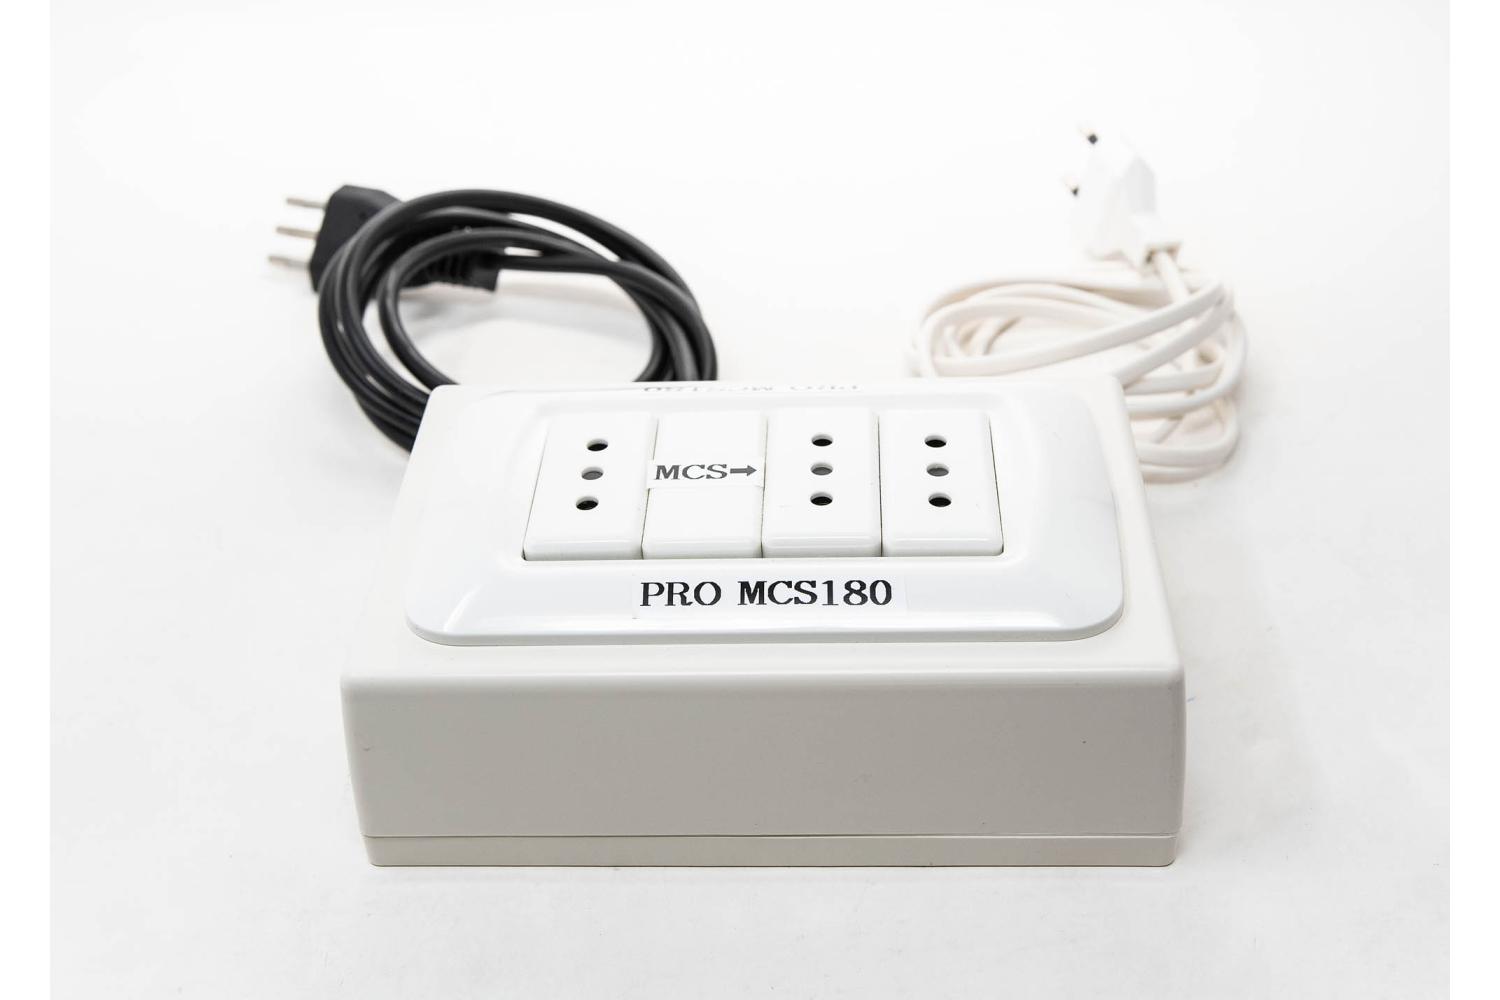  PRO MCS 180 - Dispositivi Elettronici, Effetti Elettronici